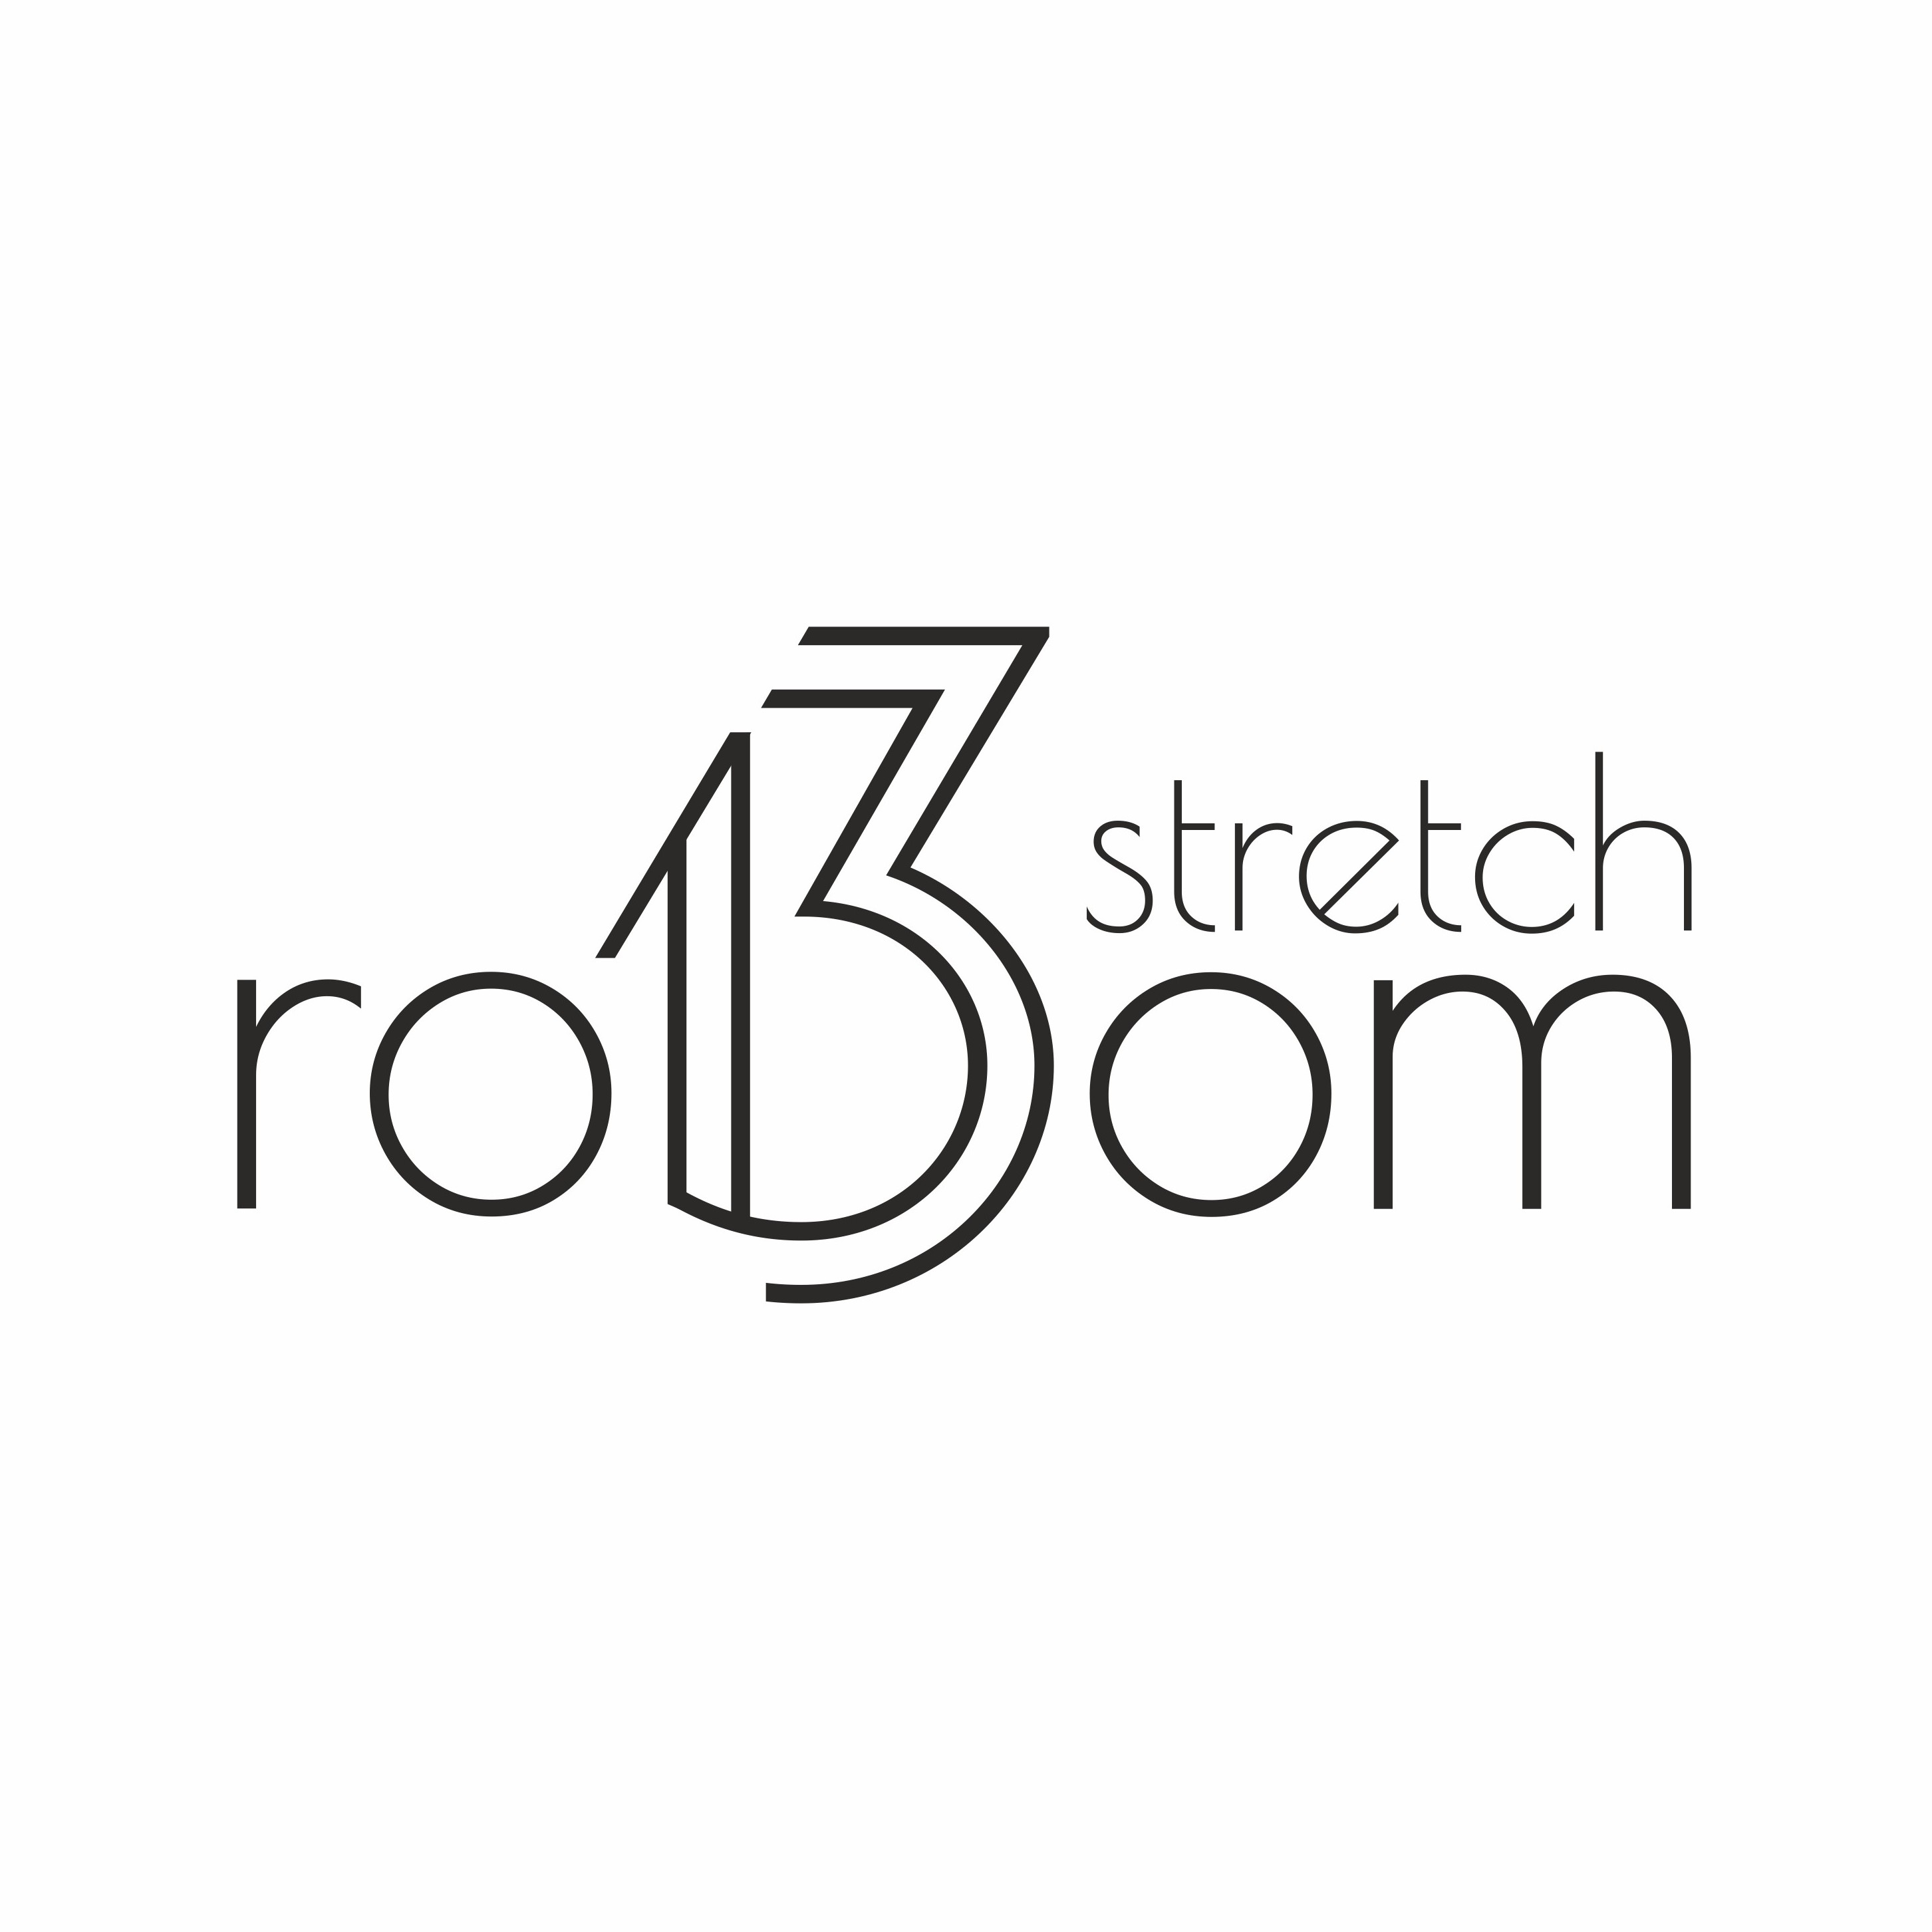 Stretch room 13